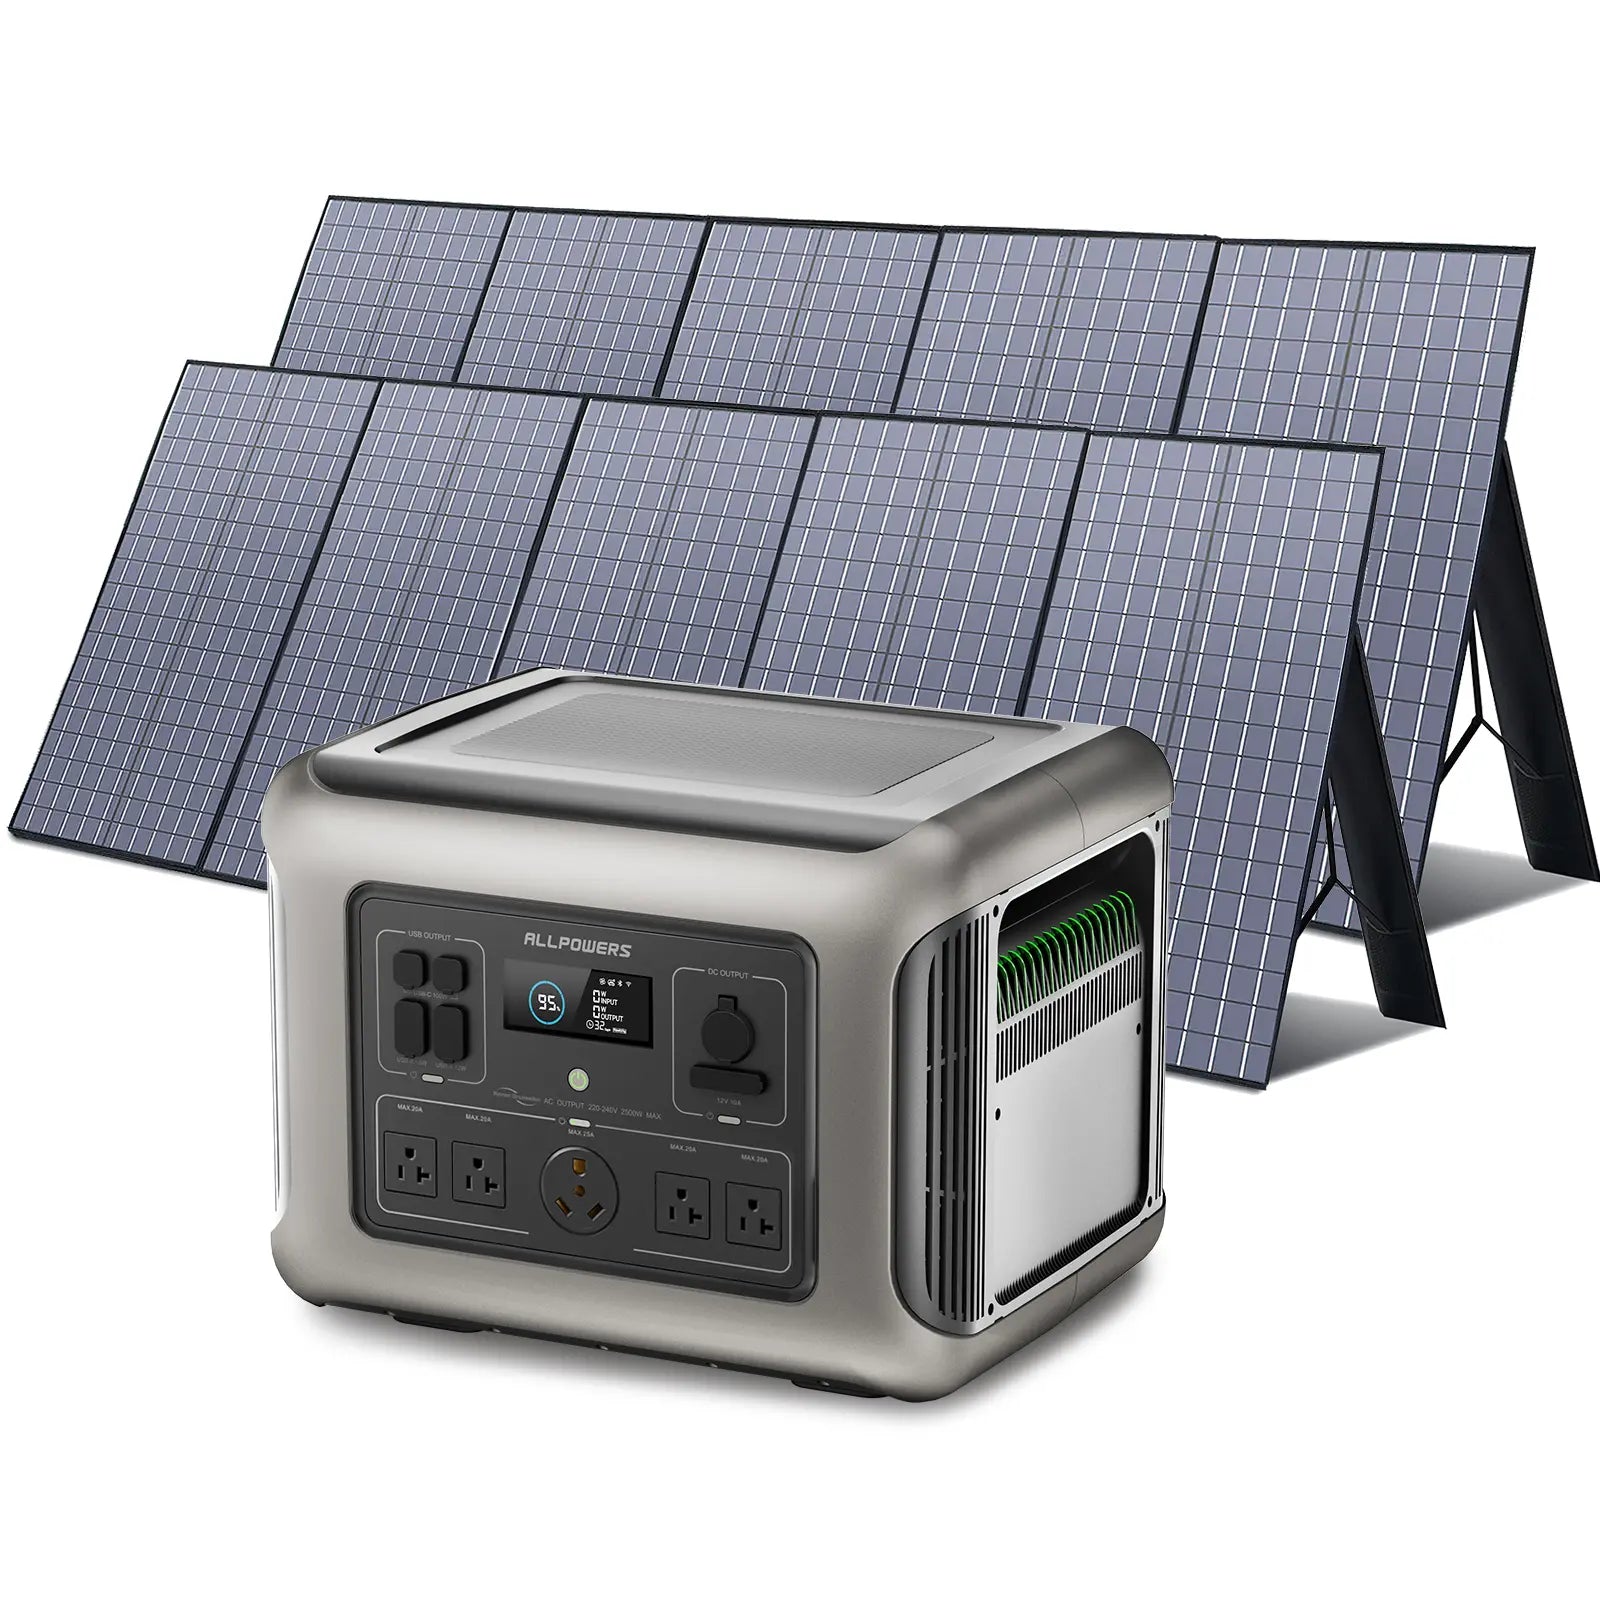 ALLPOWERS R2500 Portable Home Backup Power Station 2500W 2016W (R2500 + 2 x SP037 400W Solar Panel)